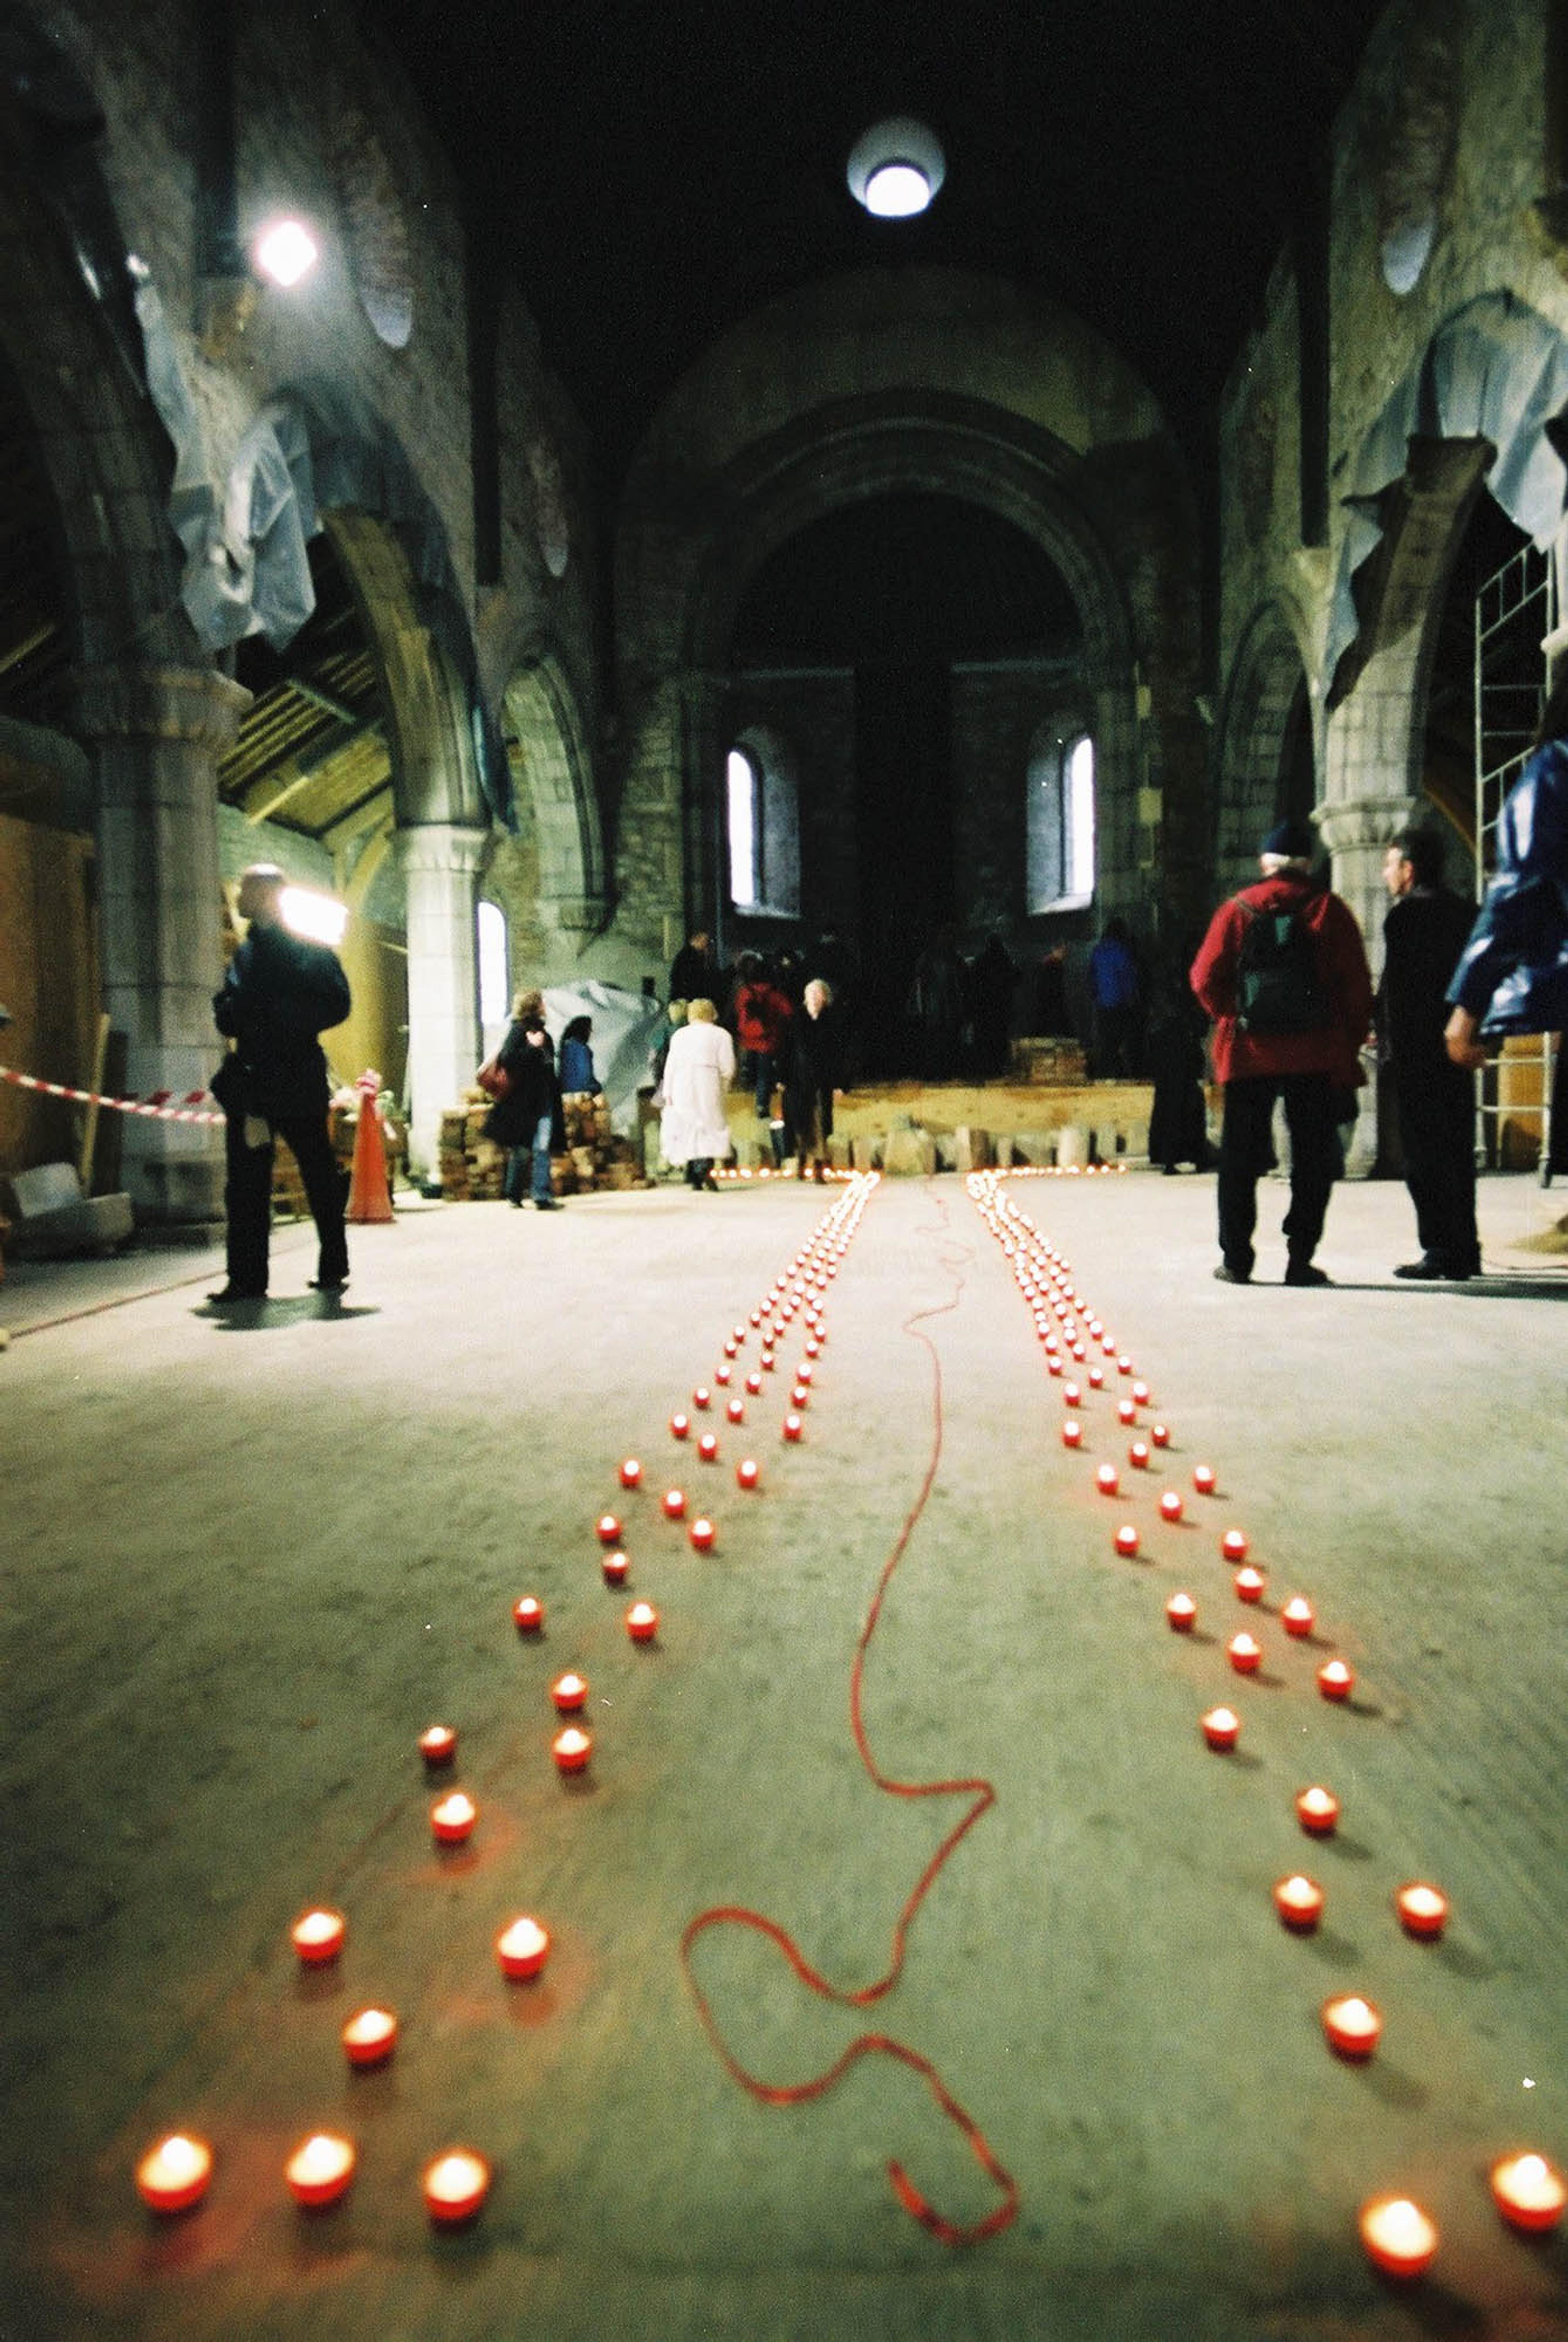 (2003) Rafael-Ottón Solís, Vigilia en pie de guerra: Vigil on the warpath, 2003, mixed media installation, 5 x 7 x 6 cm.